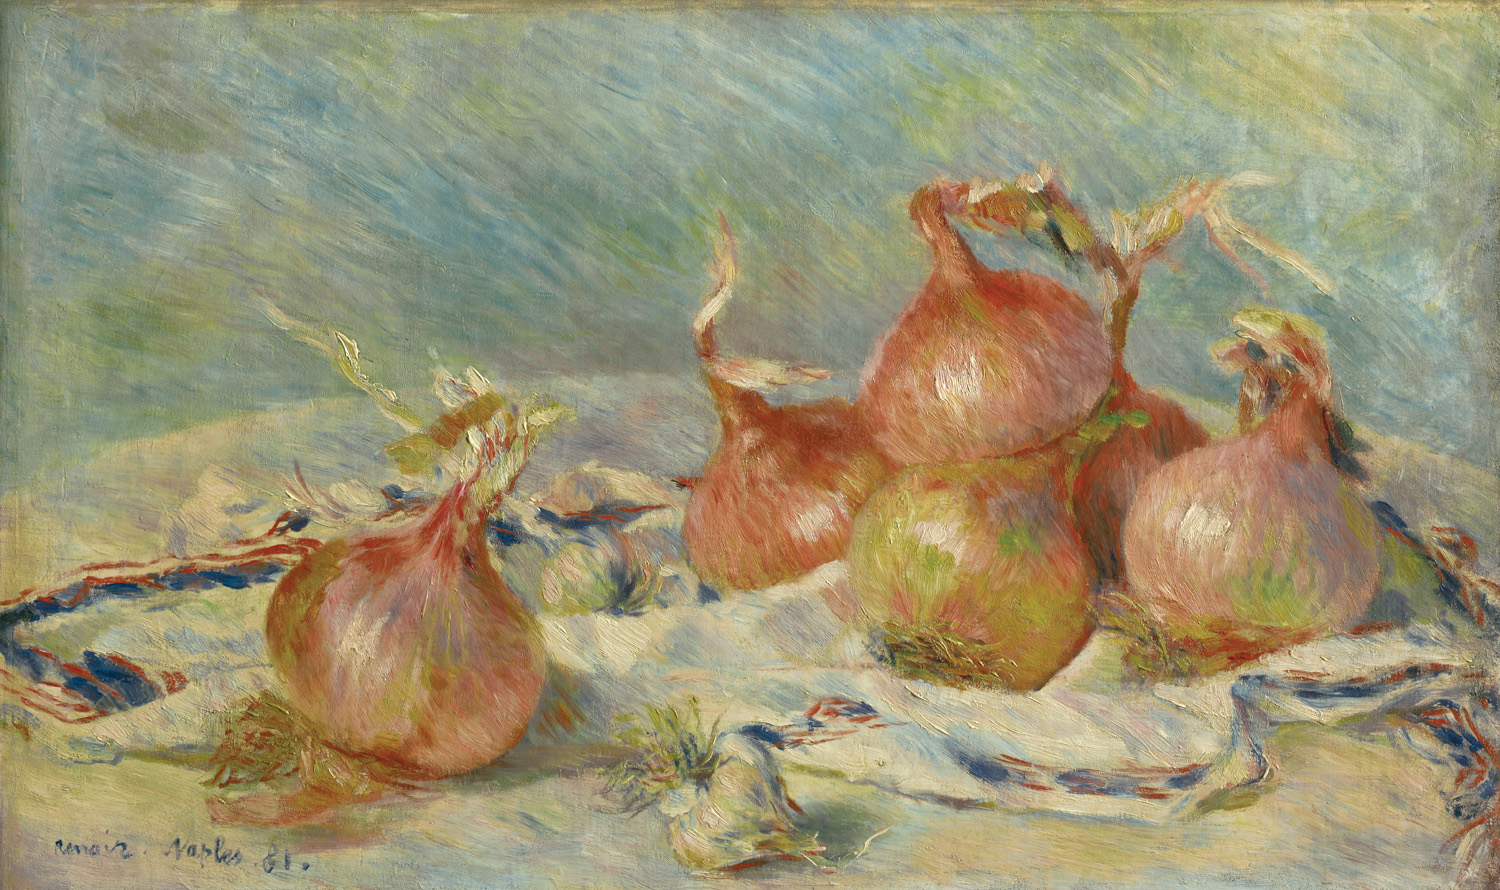 The Onions by Pierre-Auguste Renoir - 1881 - 39.1 x 60.6 cm The Clark